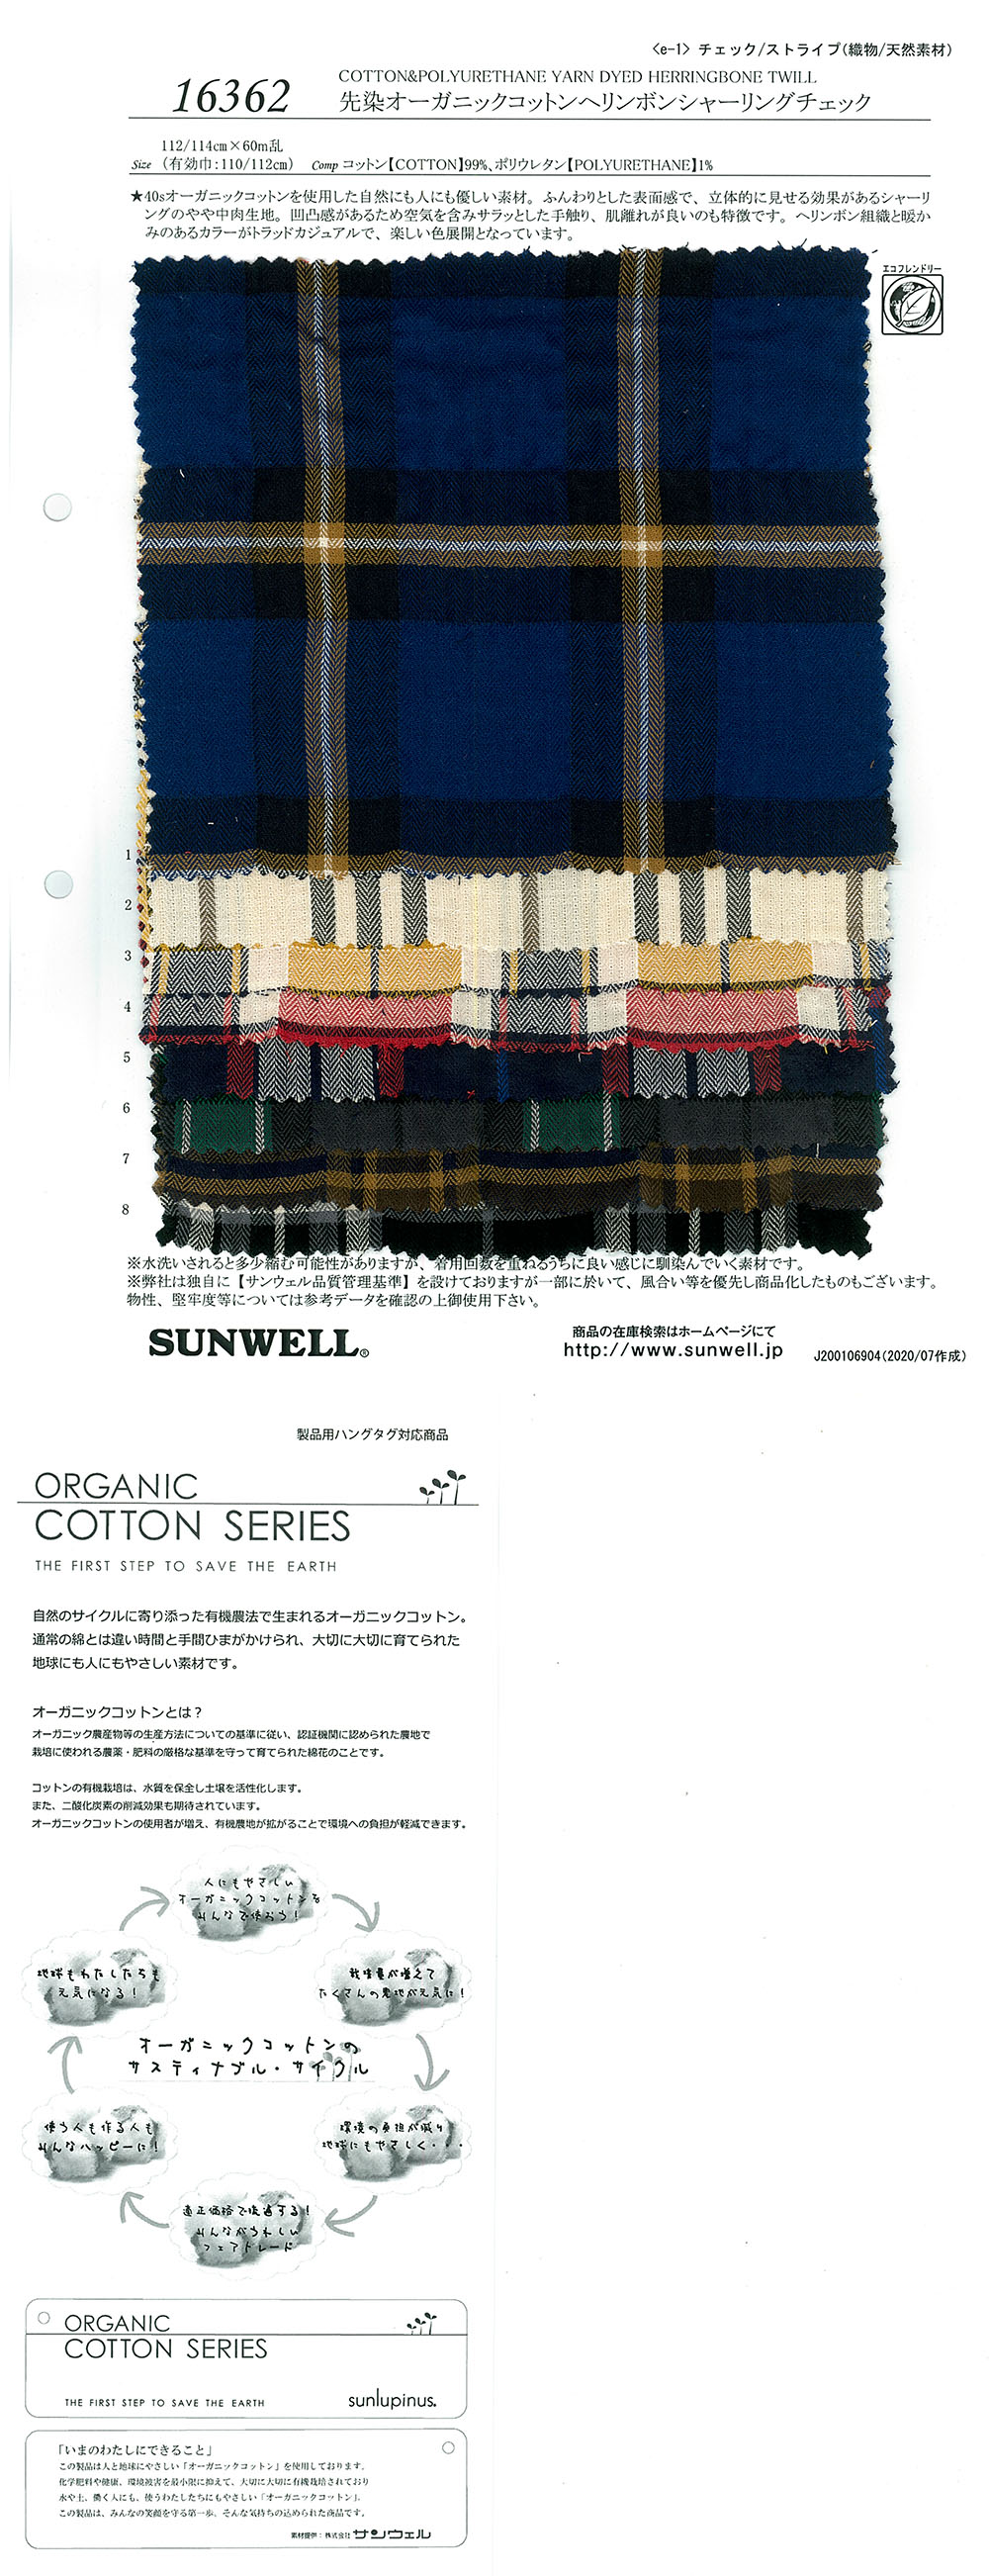 16362 Fruncido De Espiga De Algodón Orgánico Teñido En Hilado[Fabrica Textil] SUNWELL